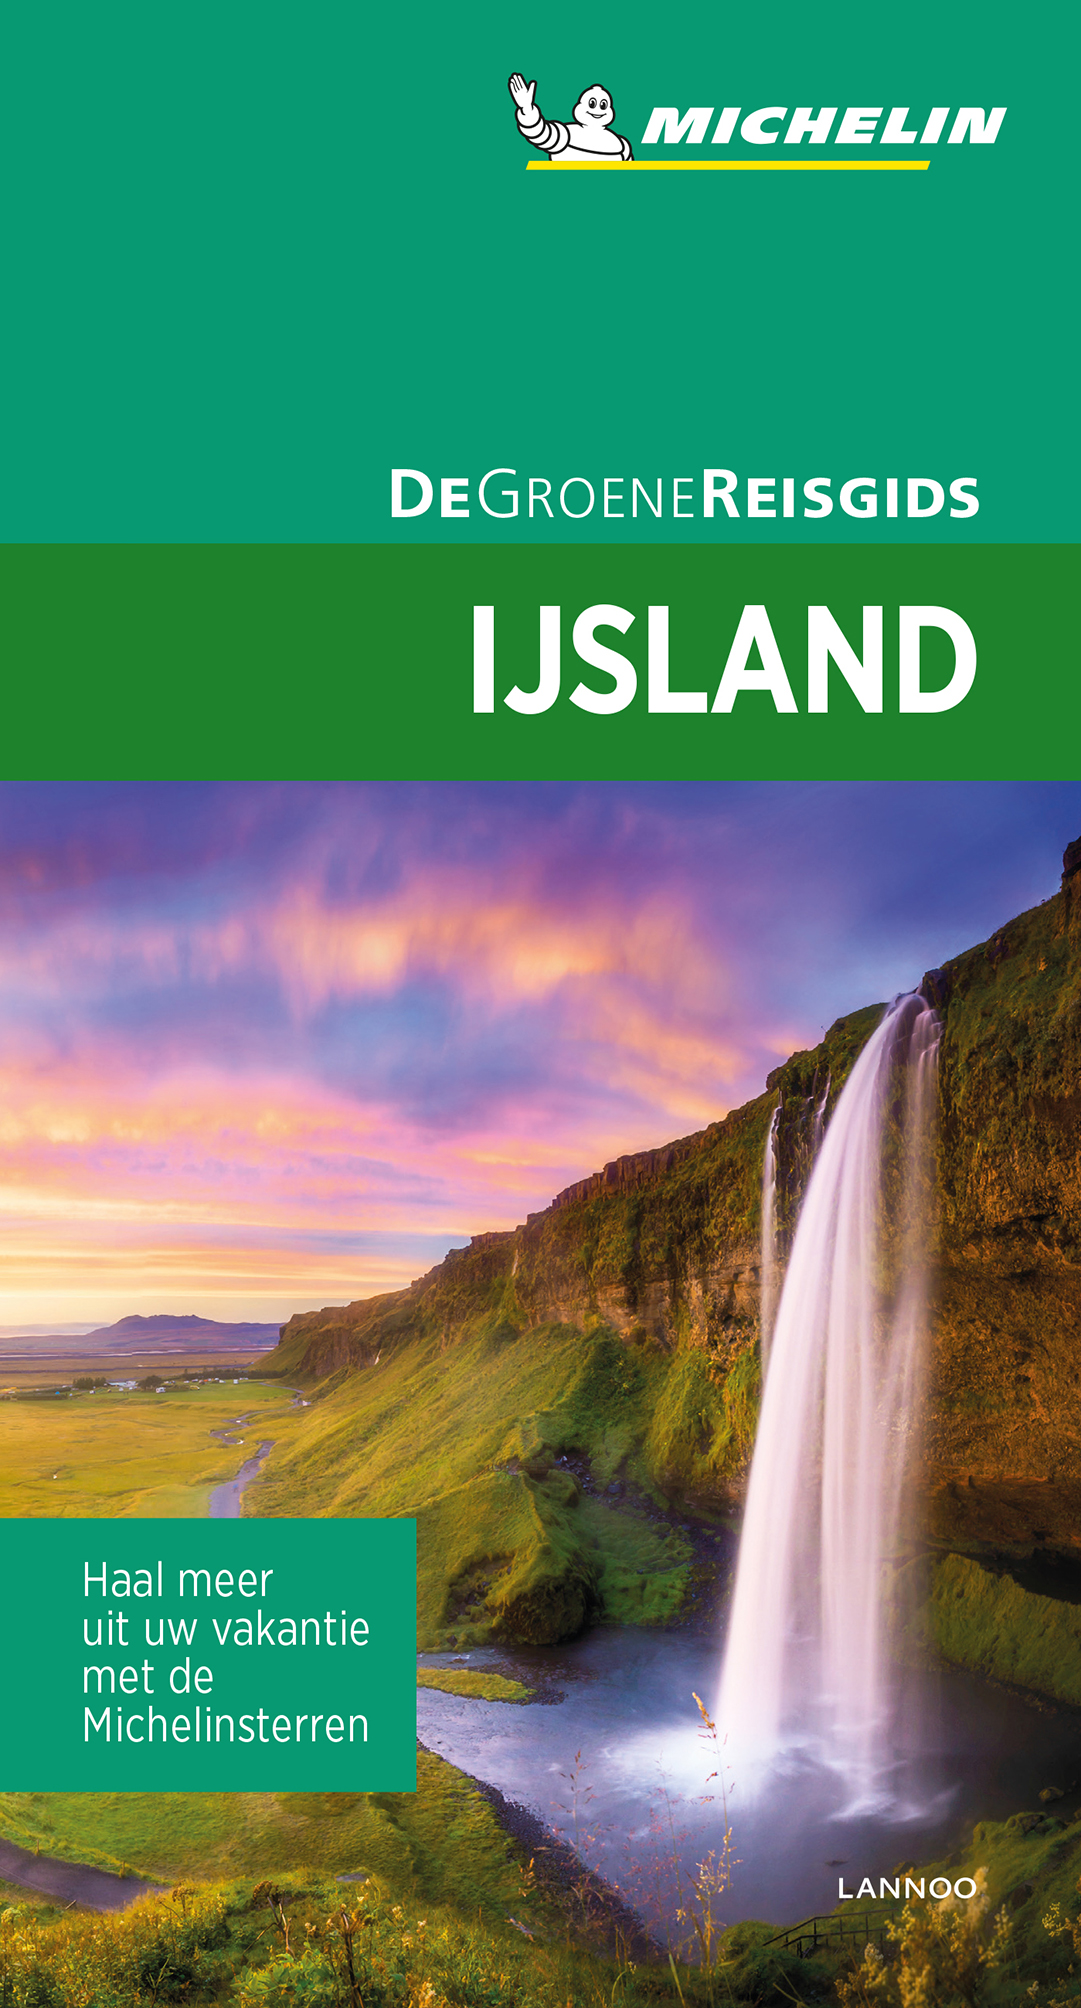 Online bestellen: Reisgids Michelin groene gids IJsland | Lannoo